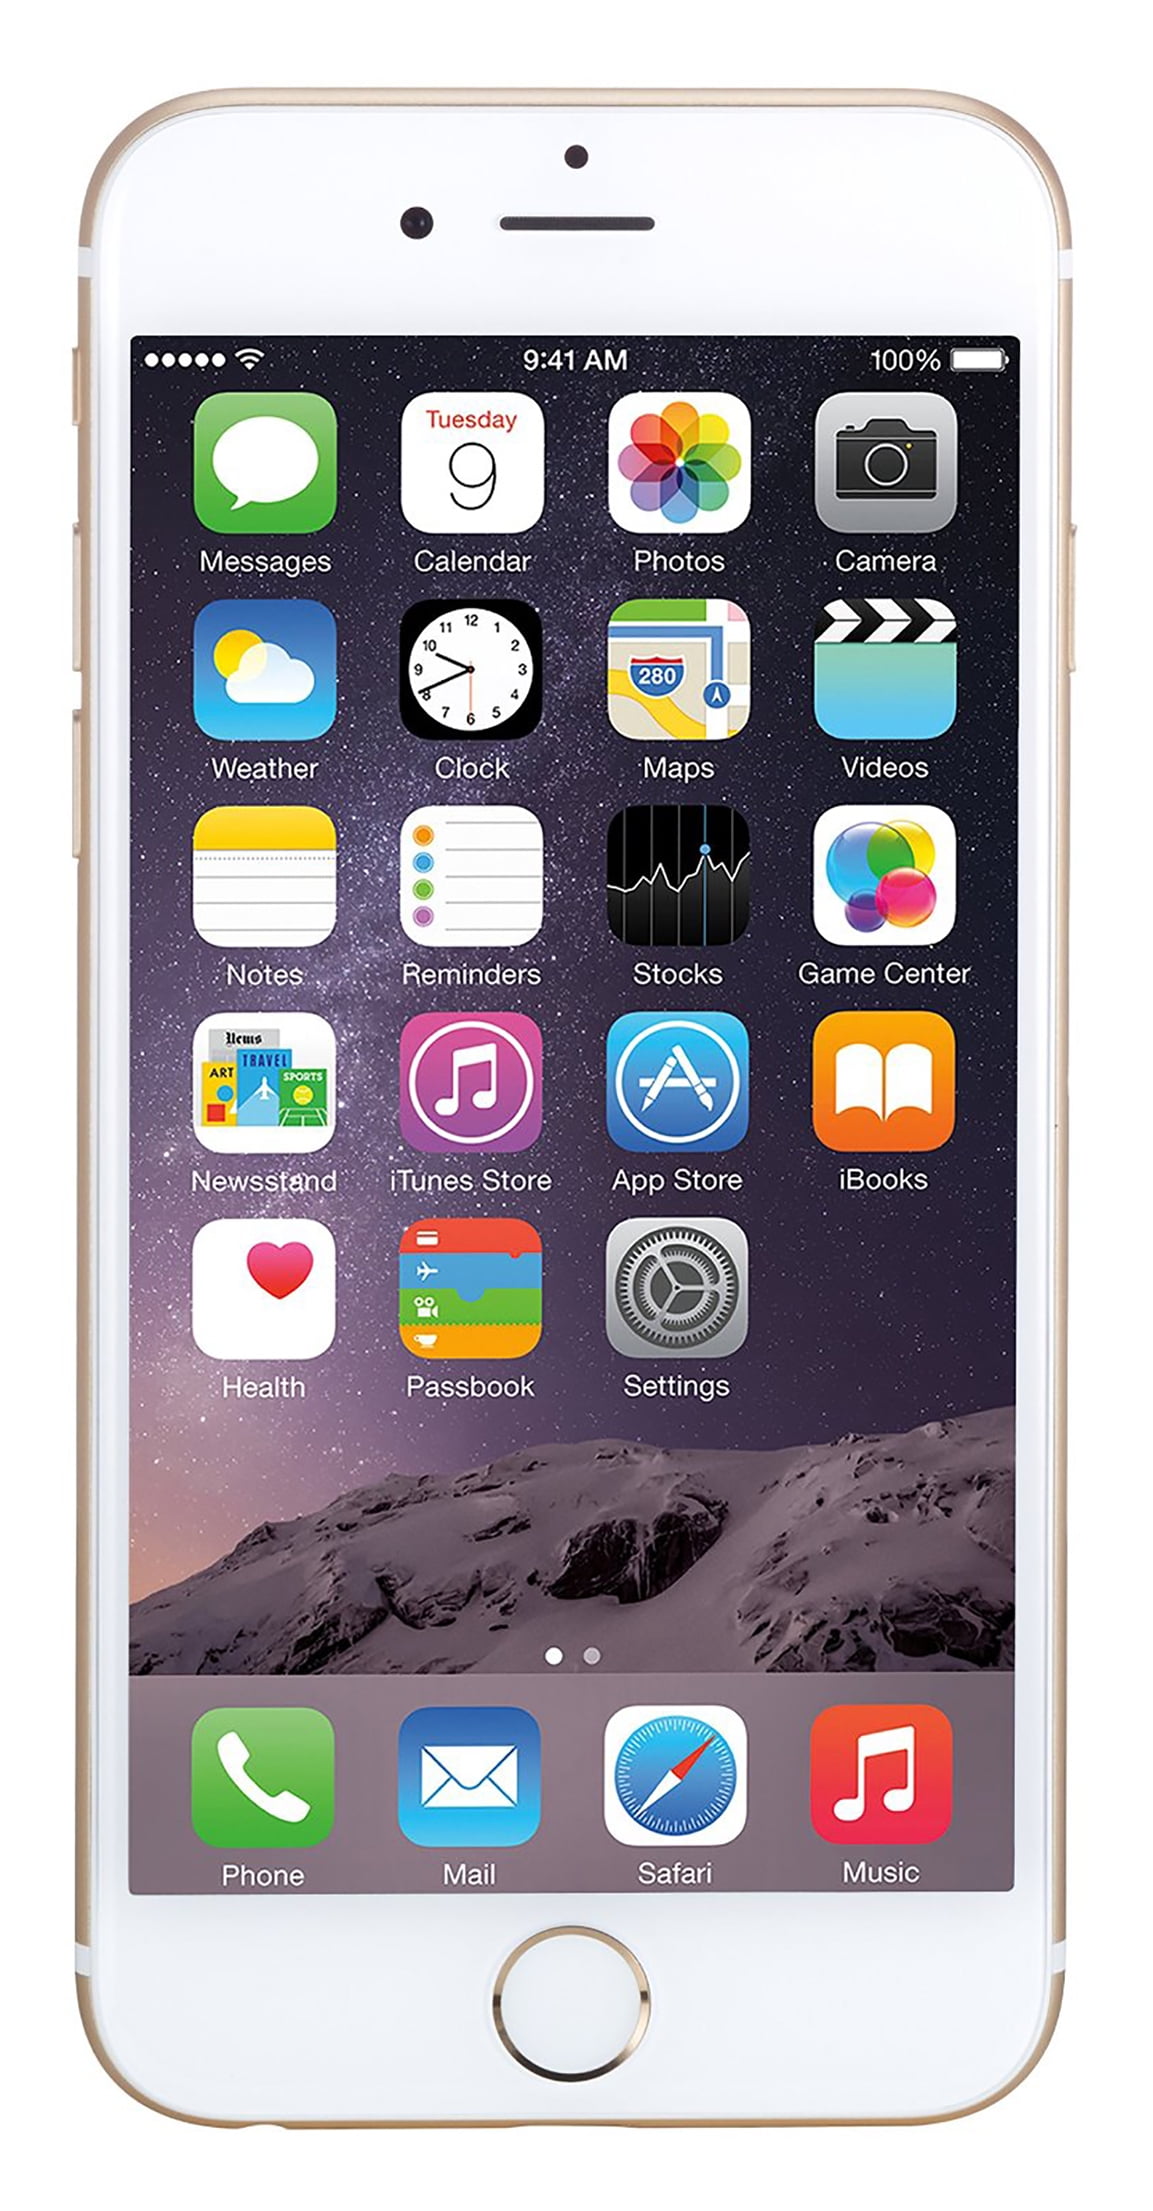 Refurbished Unlocked GSM Apple iPhone 6 16GB, Space Gray - Walmart.com